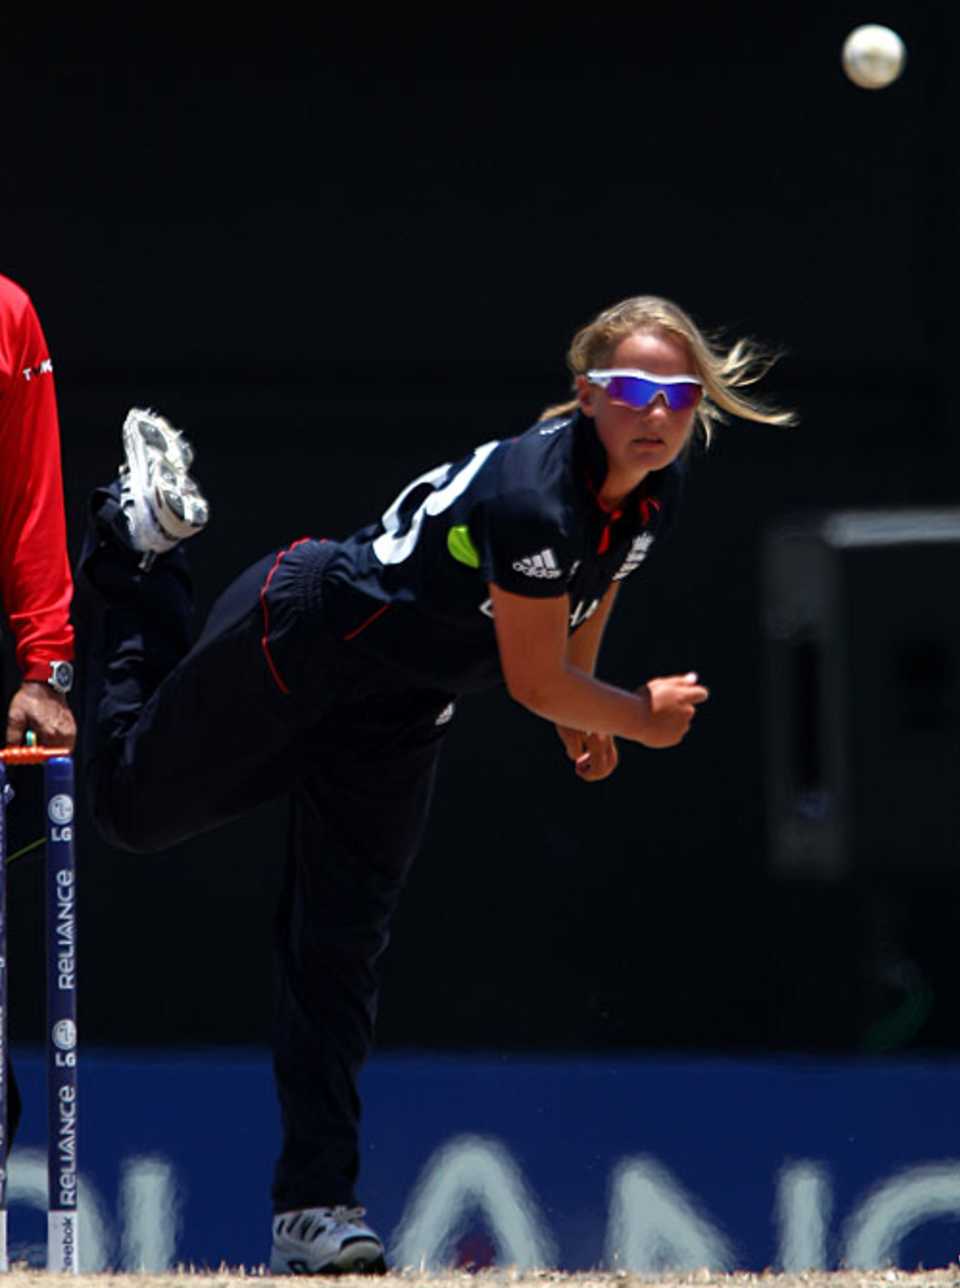 Danielle Wyatt bowls during her spell of 4 for 11 against South Africa, England Women v South Africa Women, ICC Women's World Twenty20 2010, St Kitts, May 9, 2010